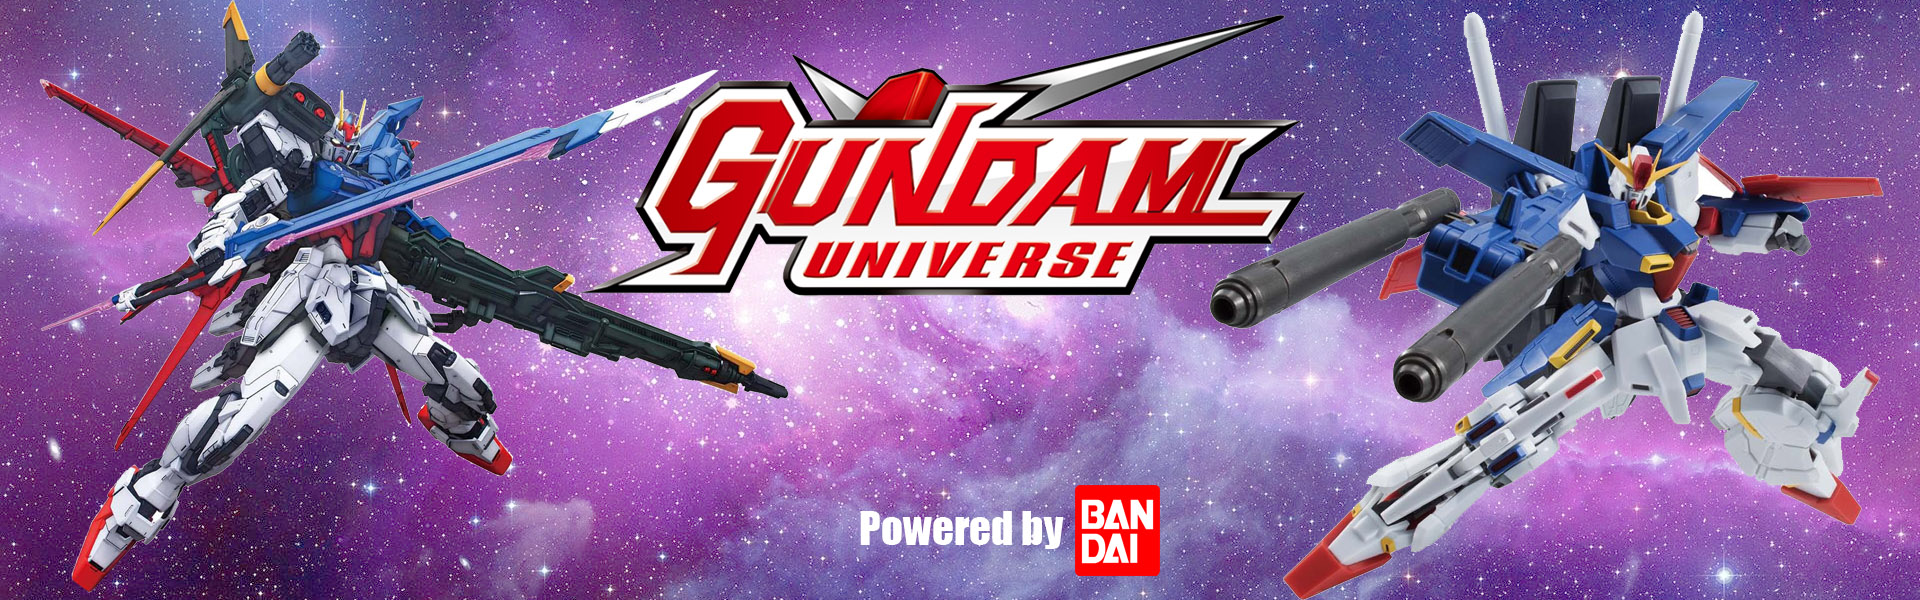 anime remix gundam website banner